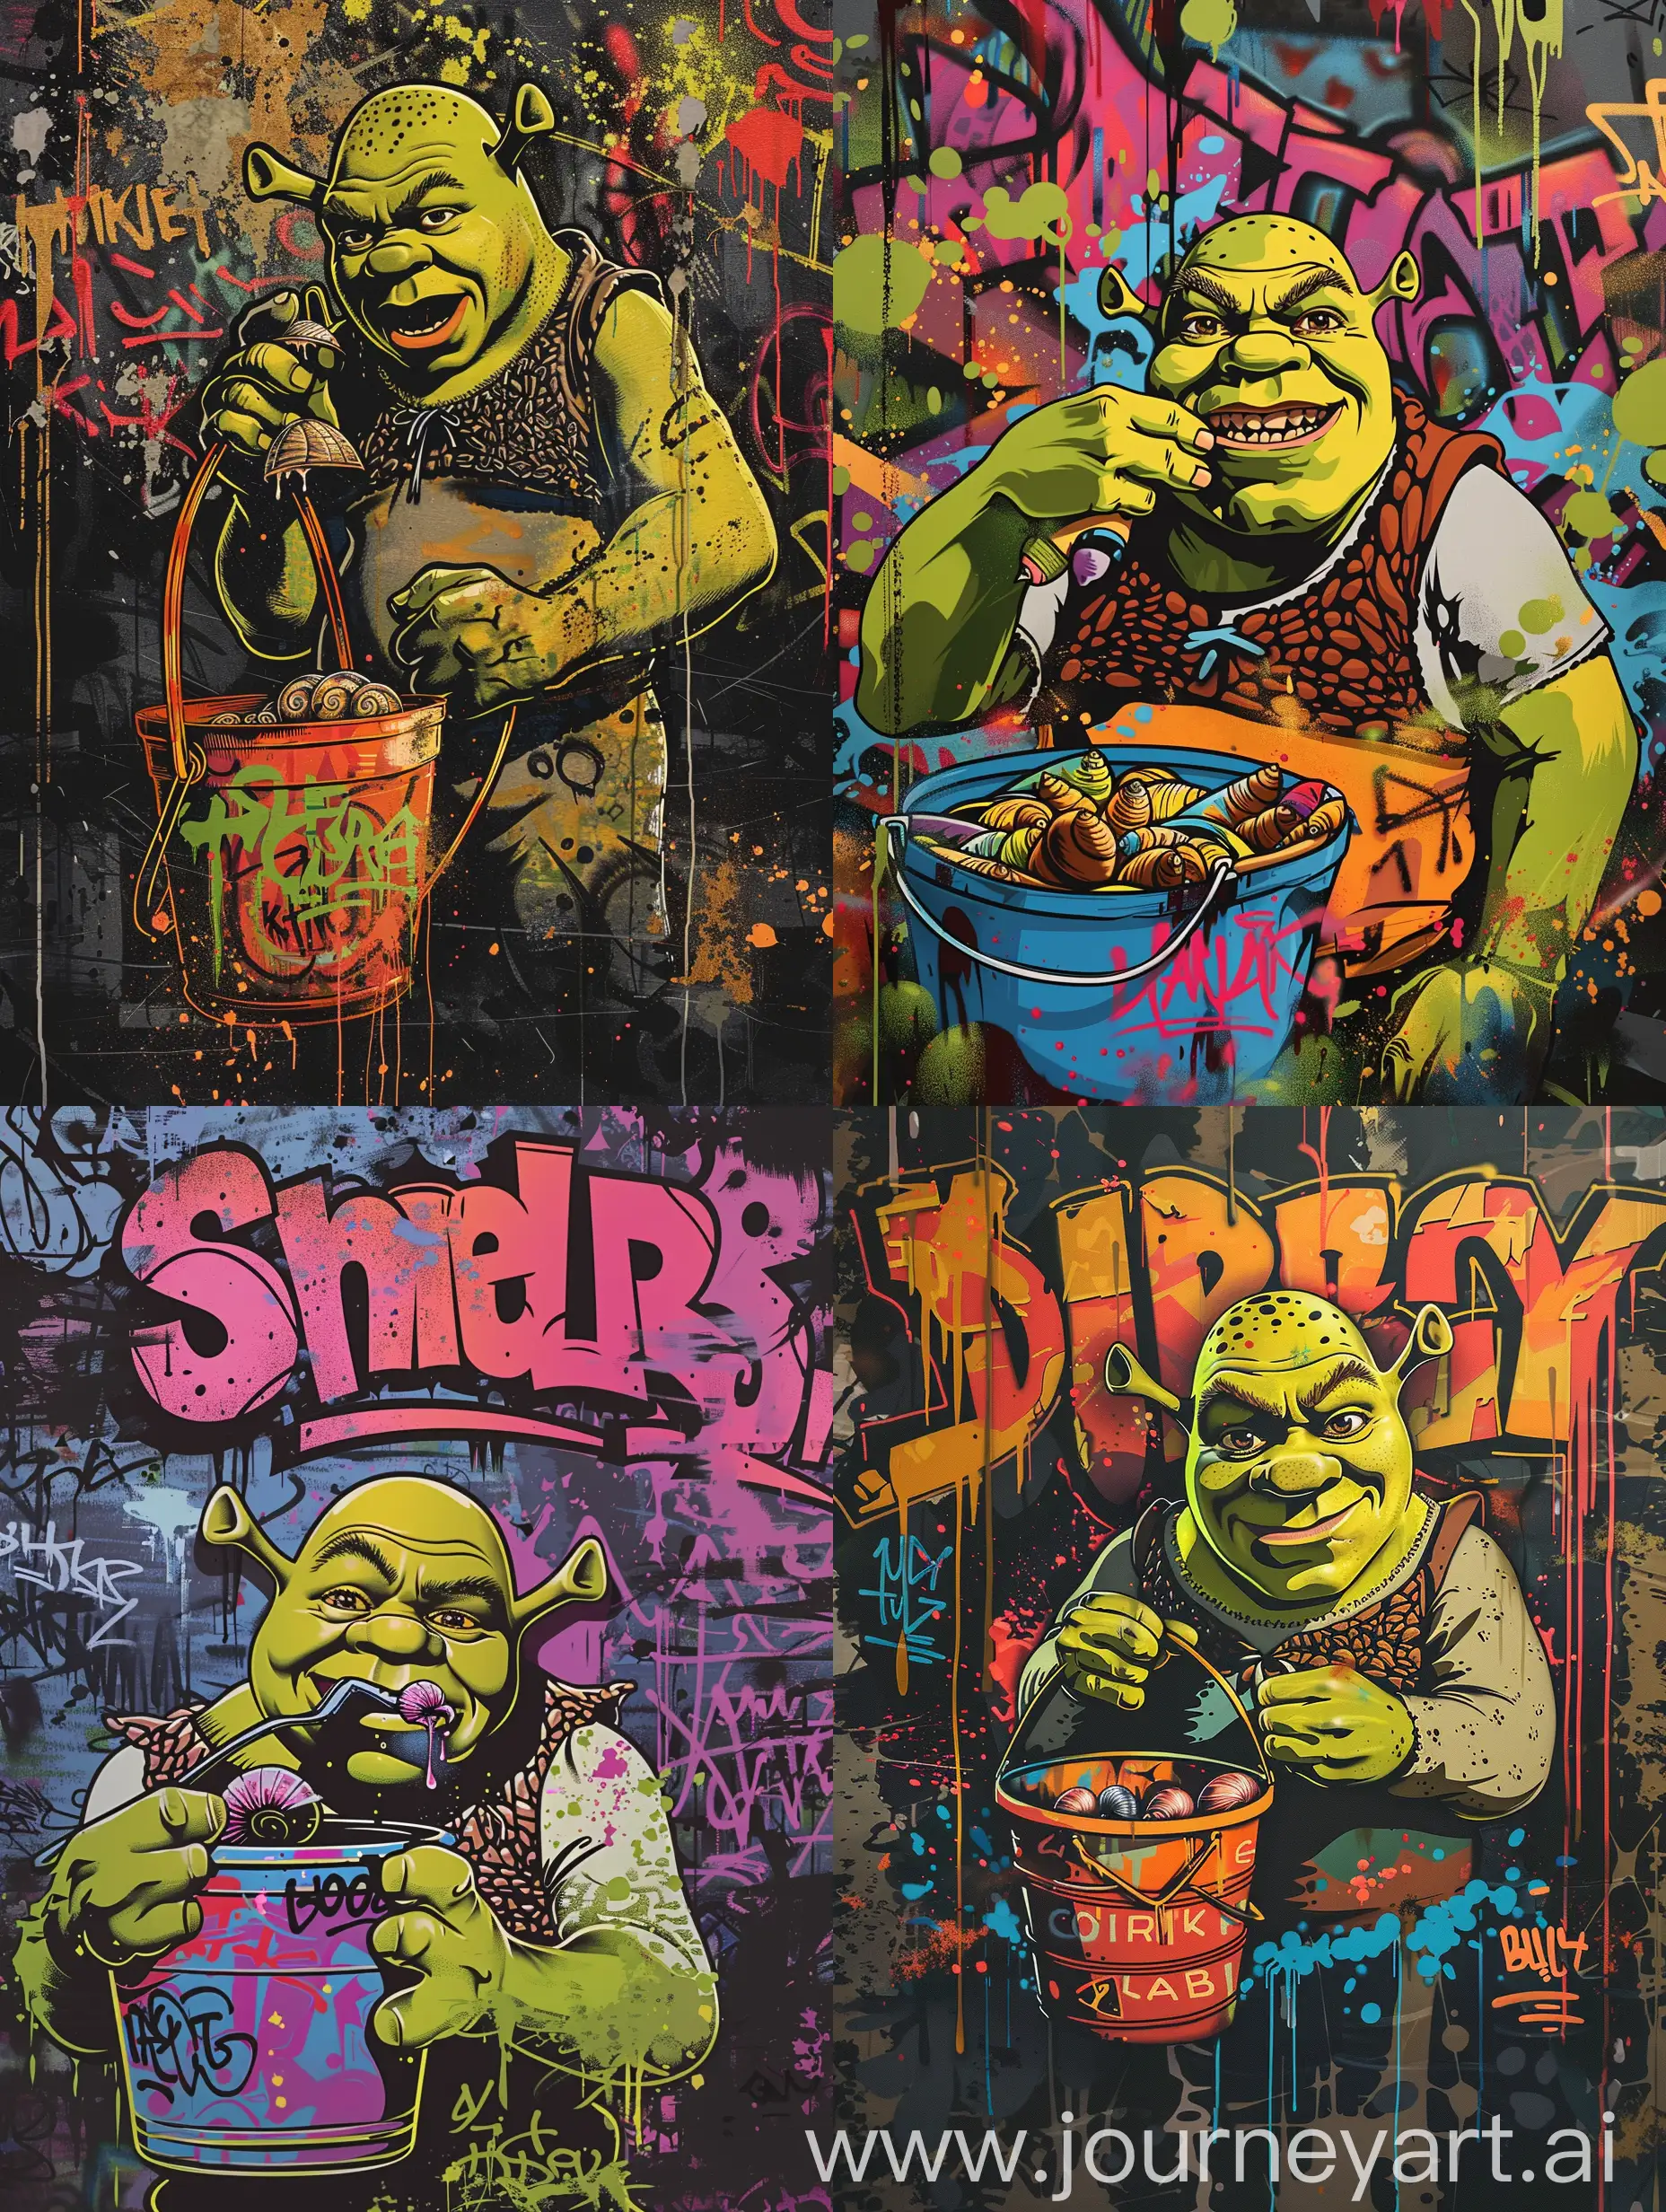 Vibrant-Urban-Graffiti-Illustration-Shrek-Enjoying-a-Bucket-of-Snails-in-a-Colorful-Swamp-Setting